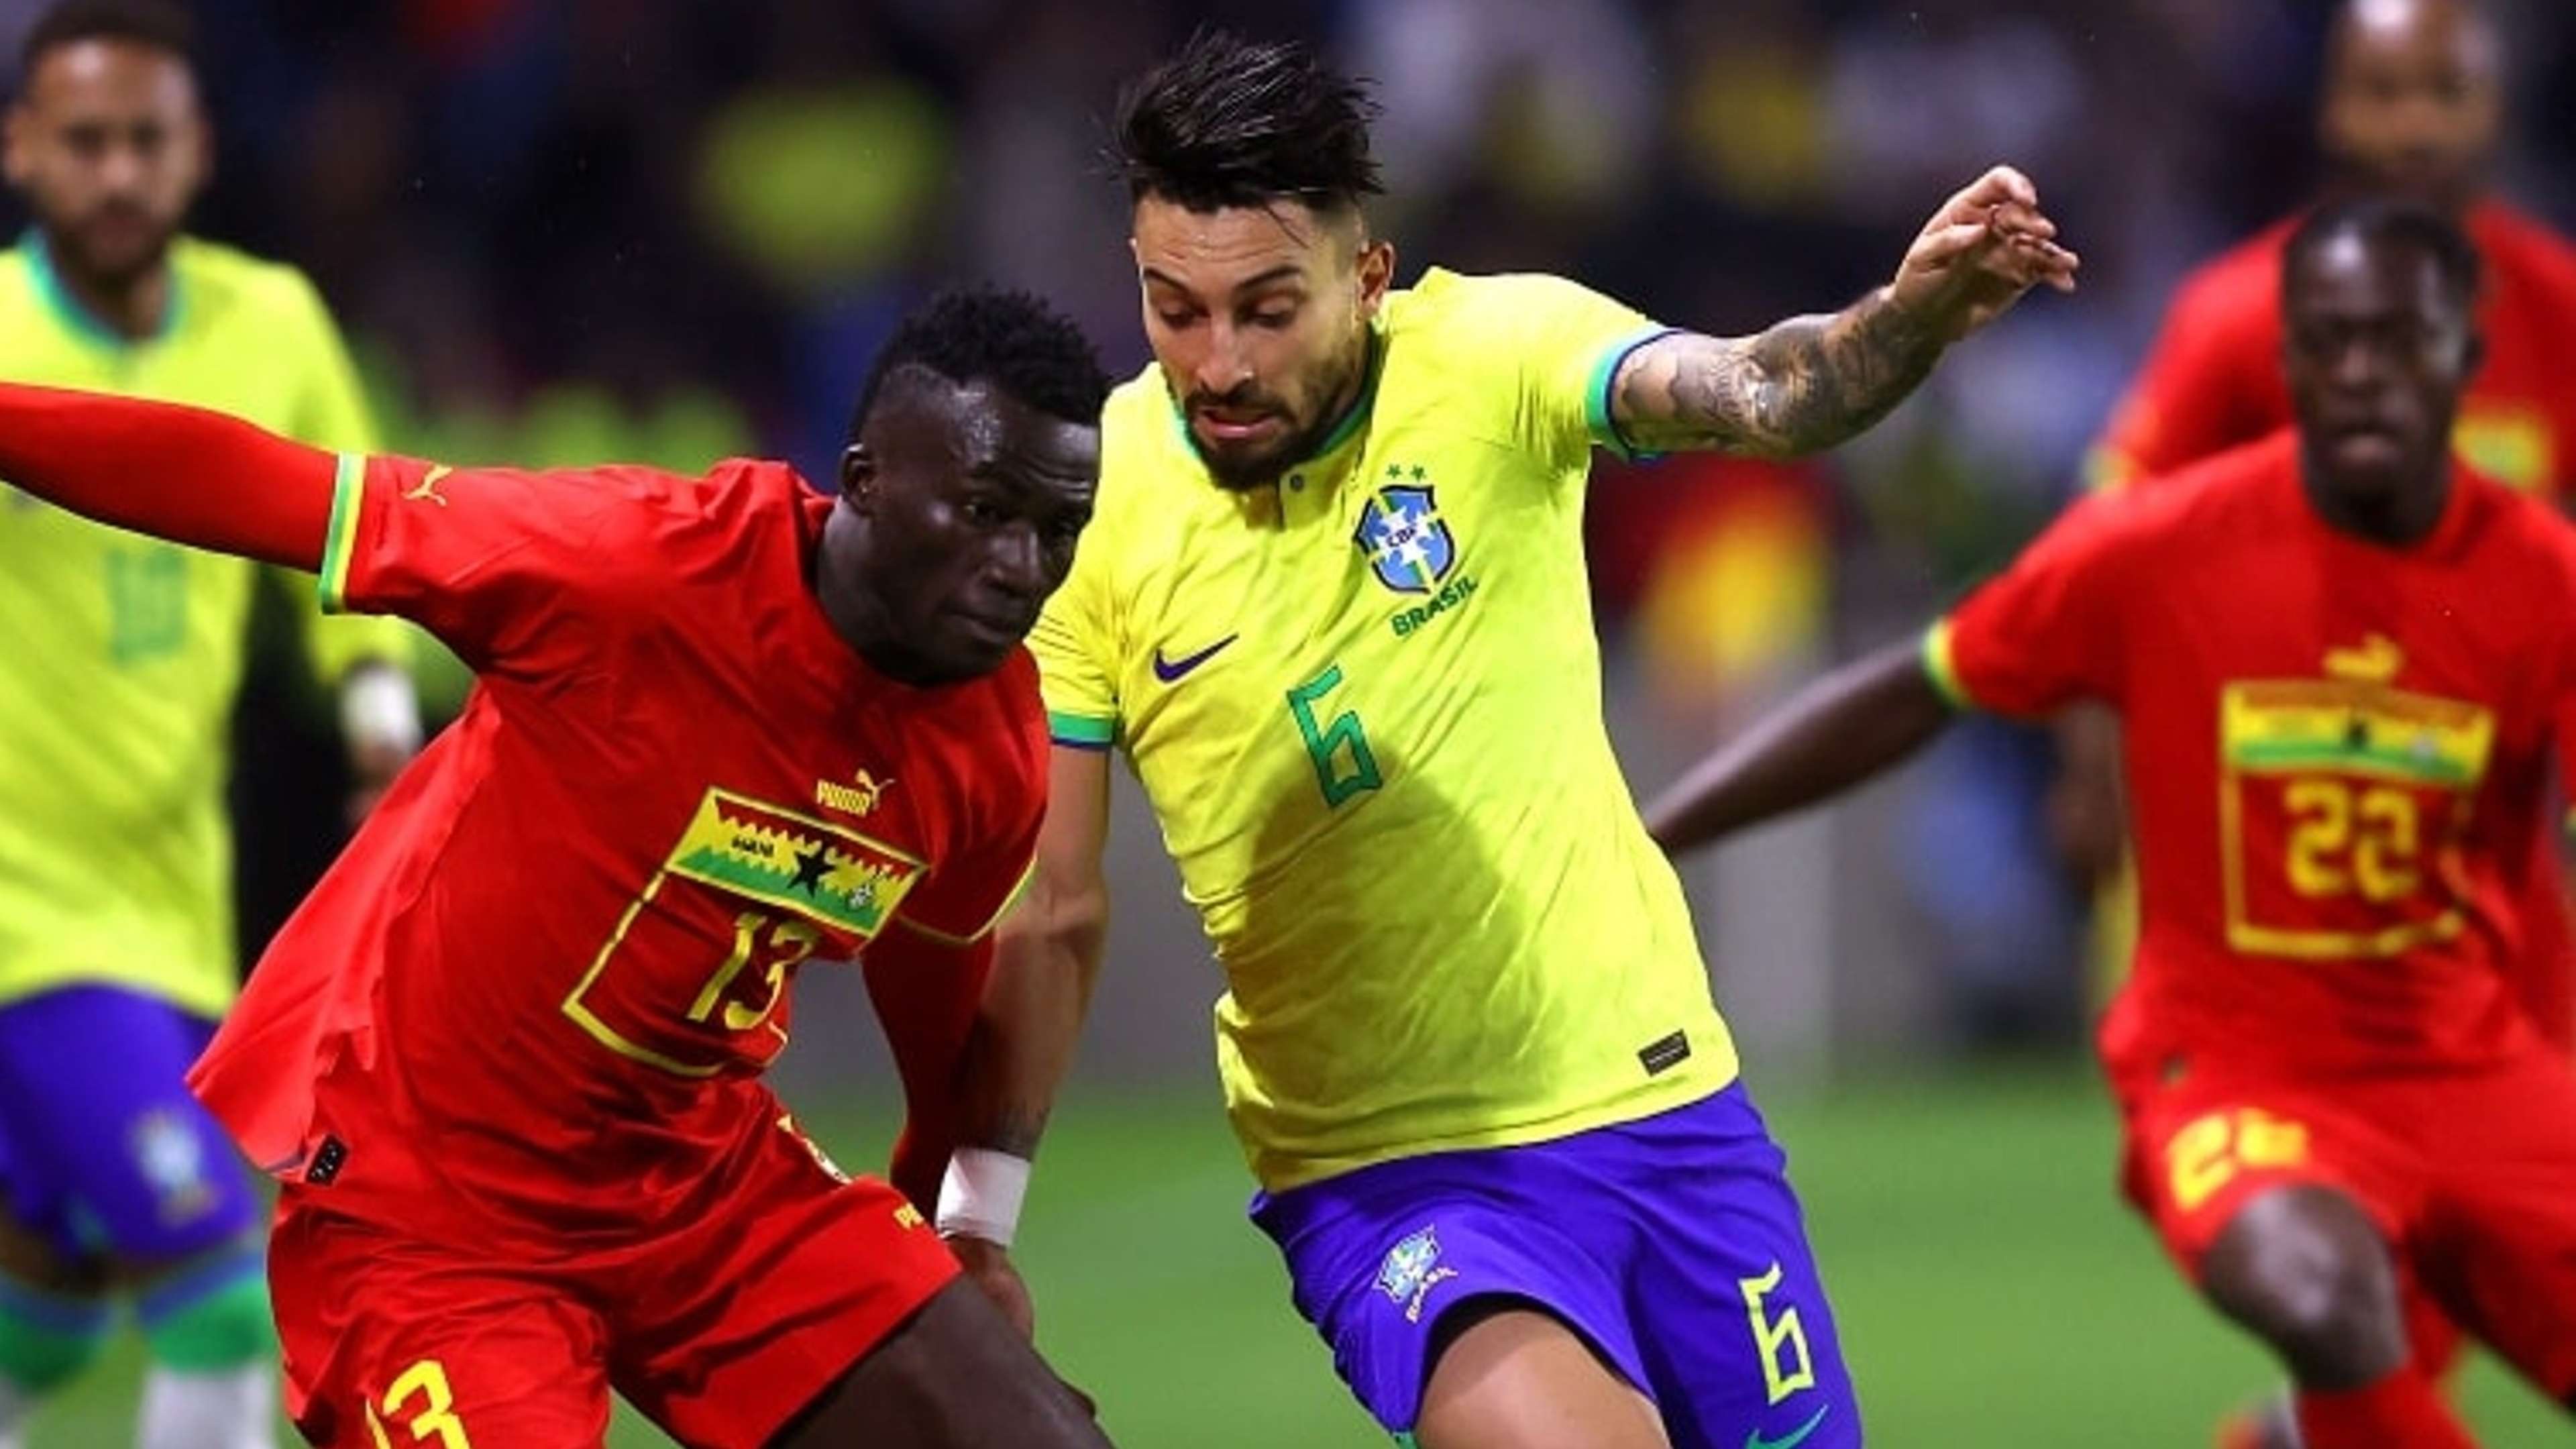 Afena-Gyan of Ghana vs Brazil.